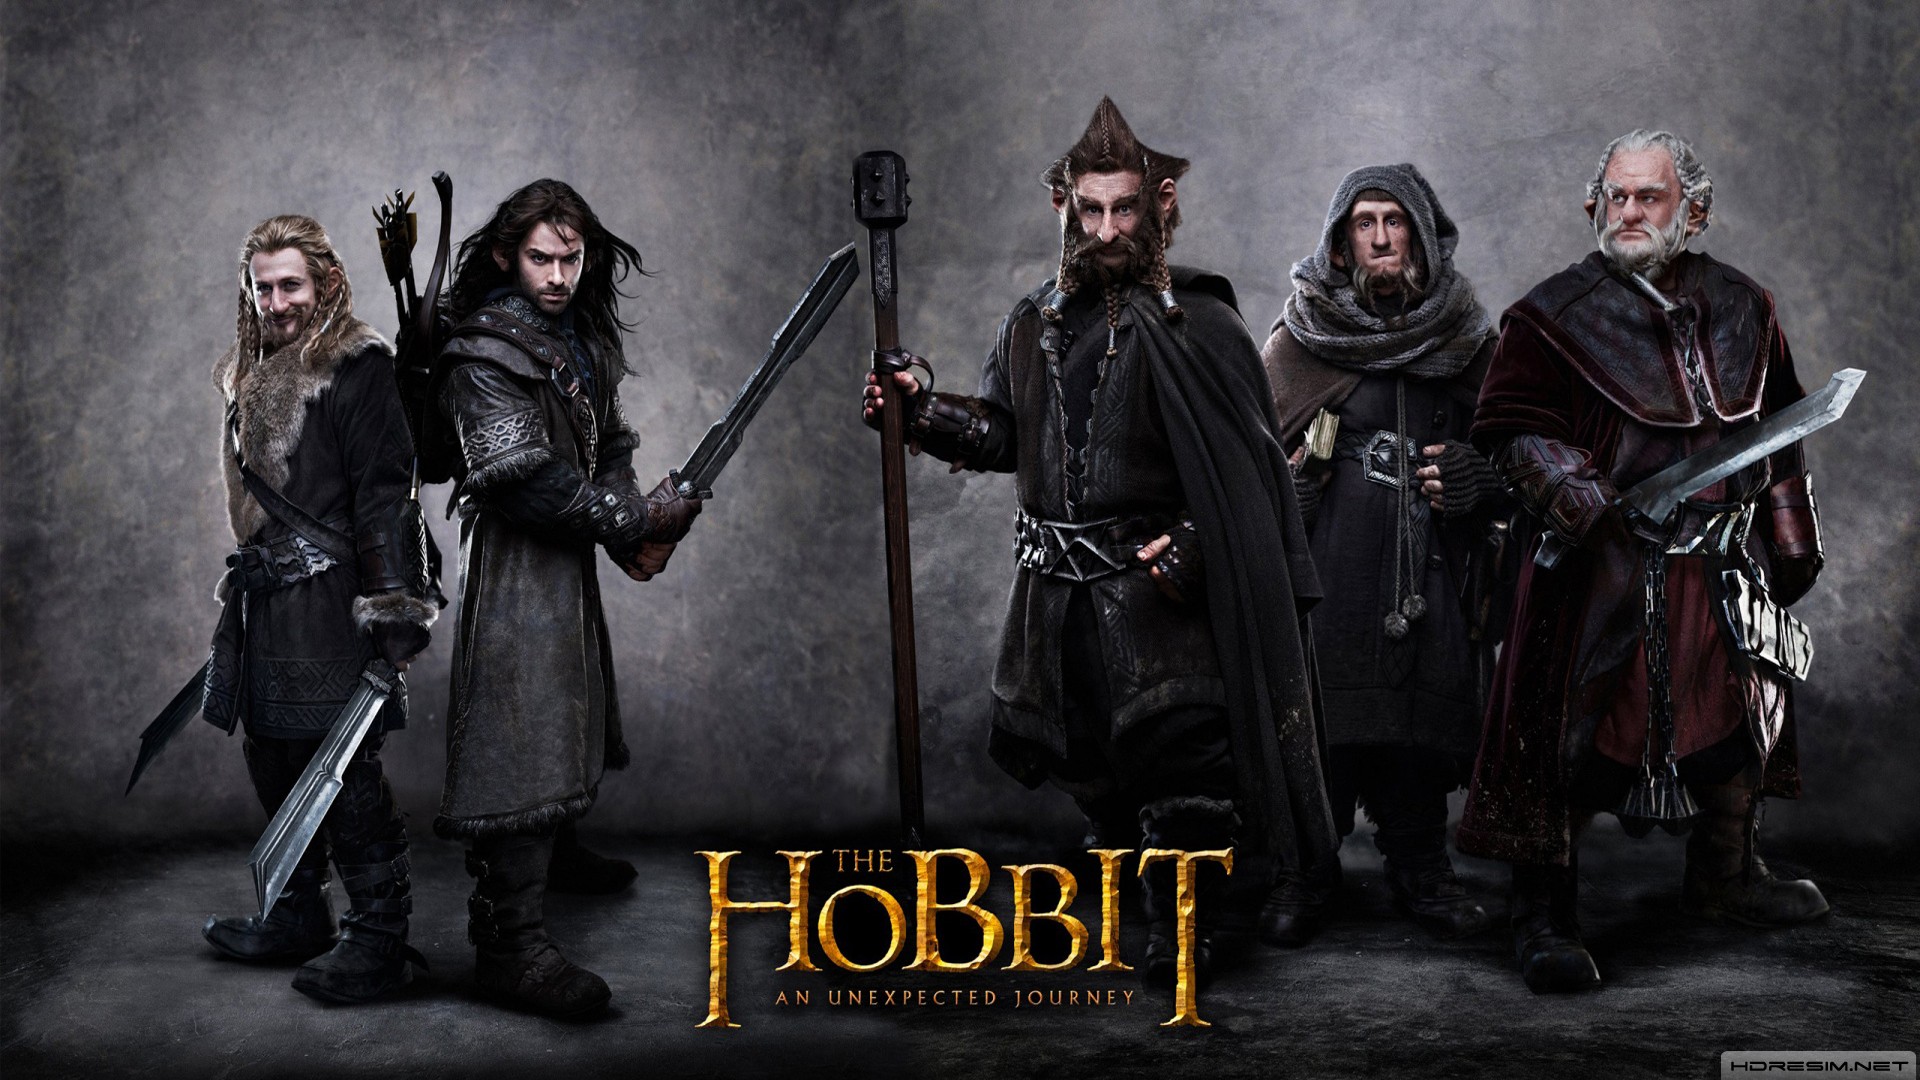 hobbit,beklenmedik yolculuk,film,dean ogorman,aidan turner,jed brophy,mark hadlow,adam brown